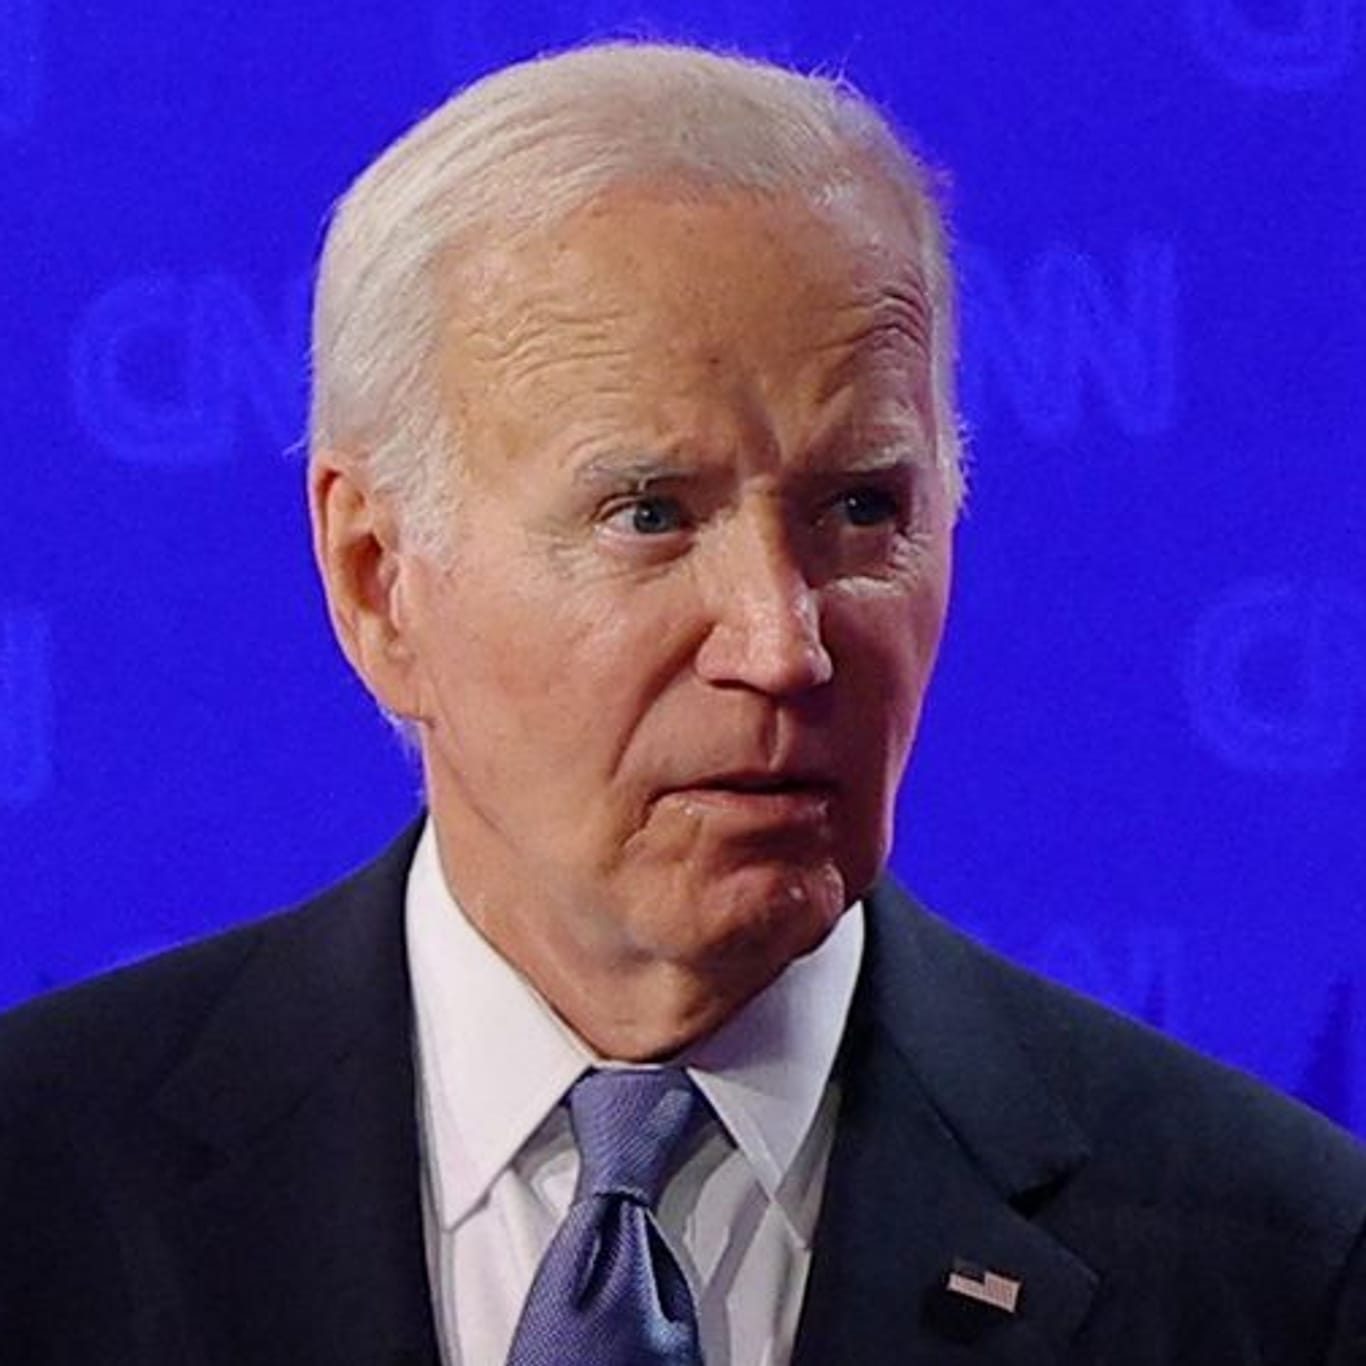 Joe Biden: Der amtierende US-Präsident konnte beim TV-Duell gegen Donald Trump nicht punkten.